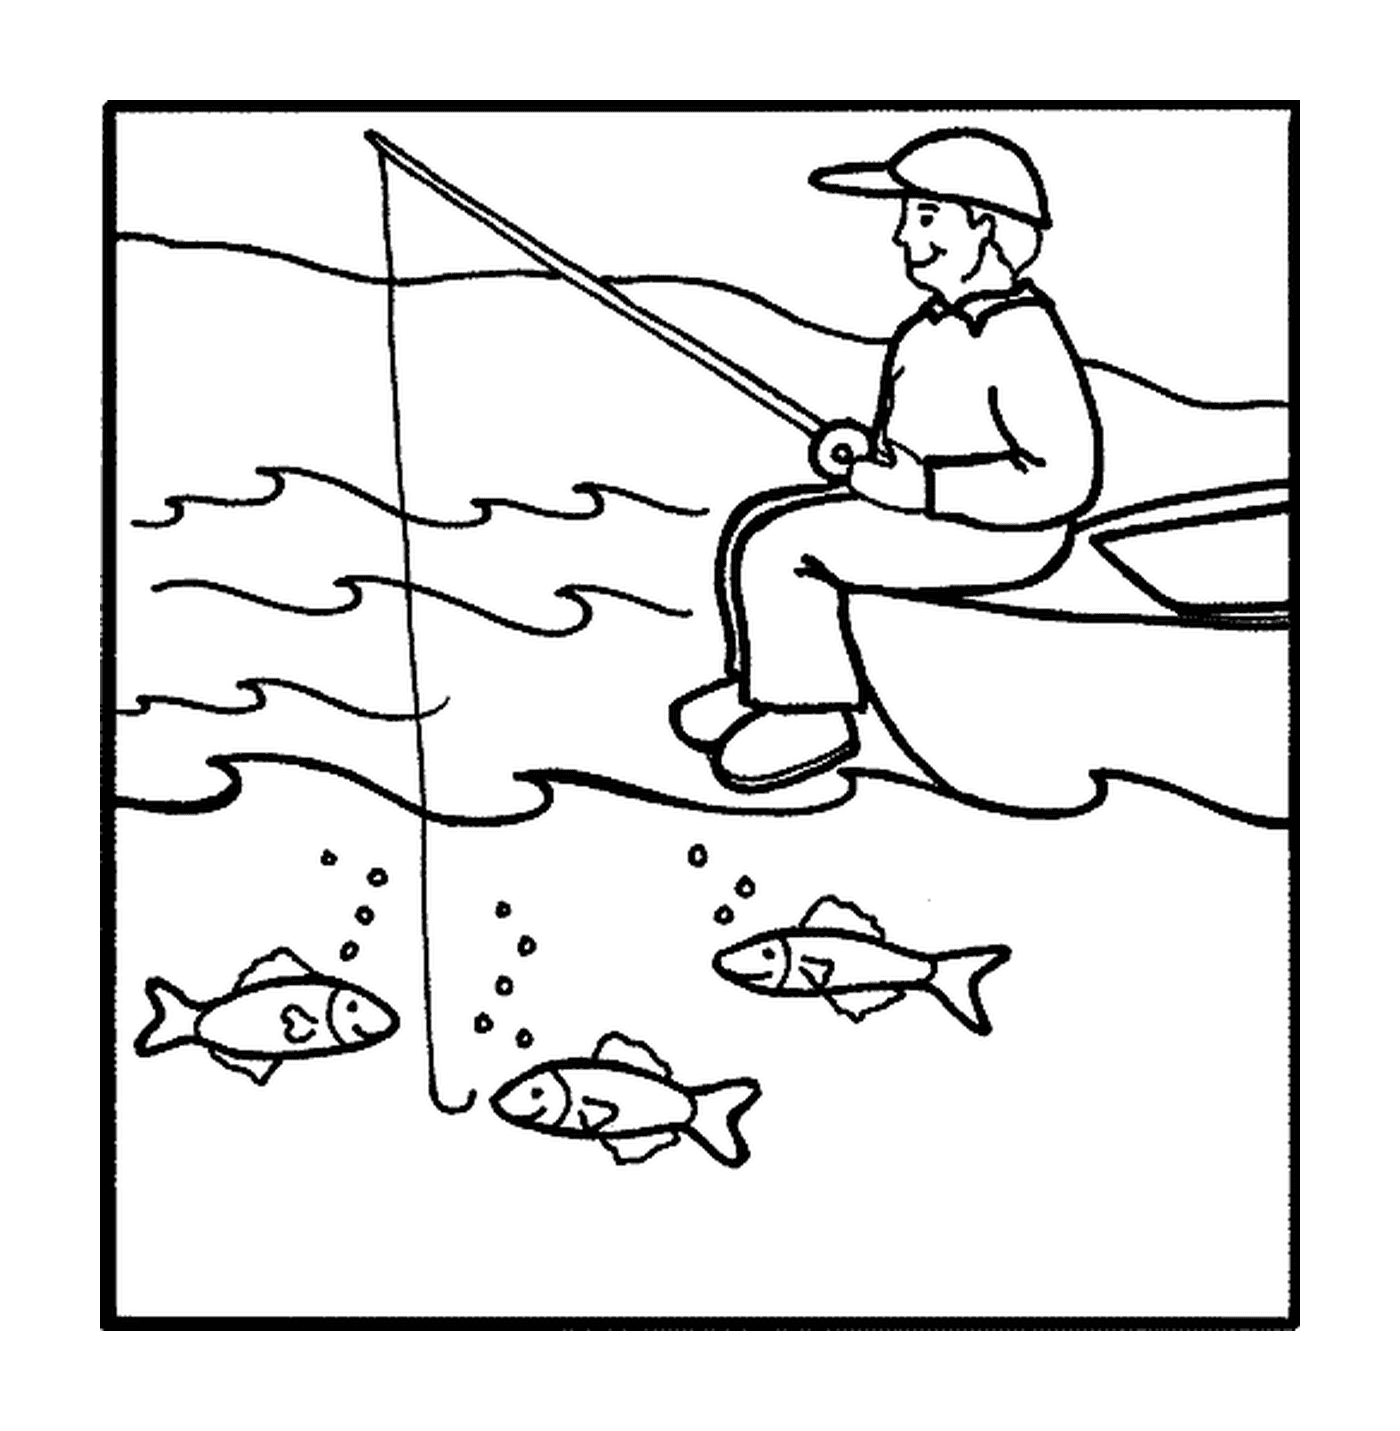  Man fishing 